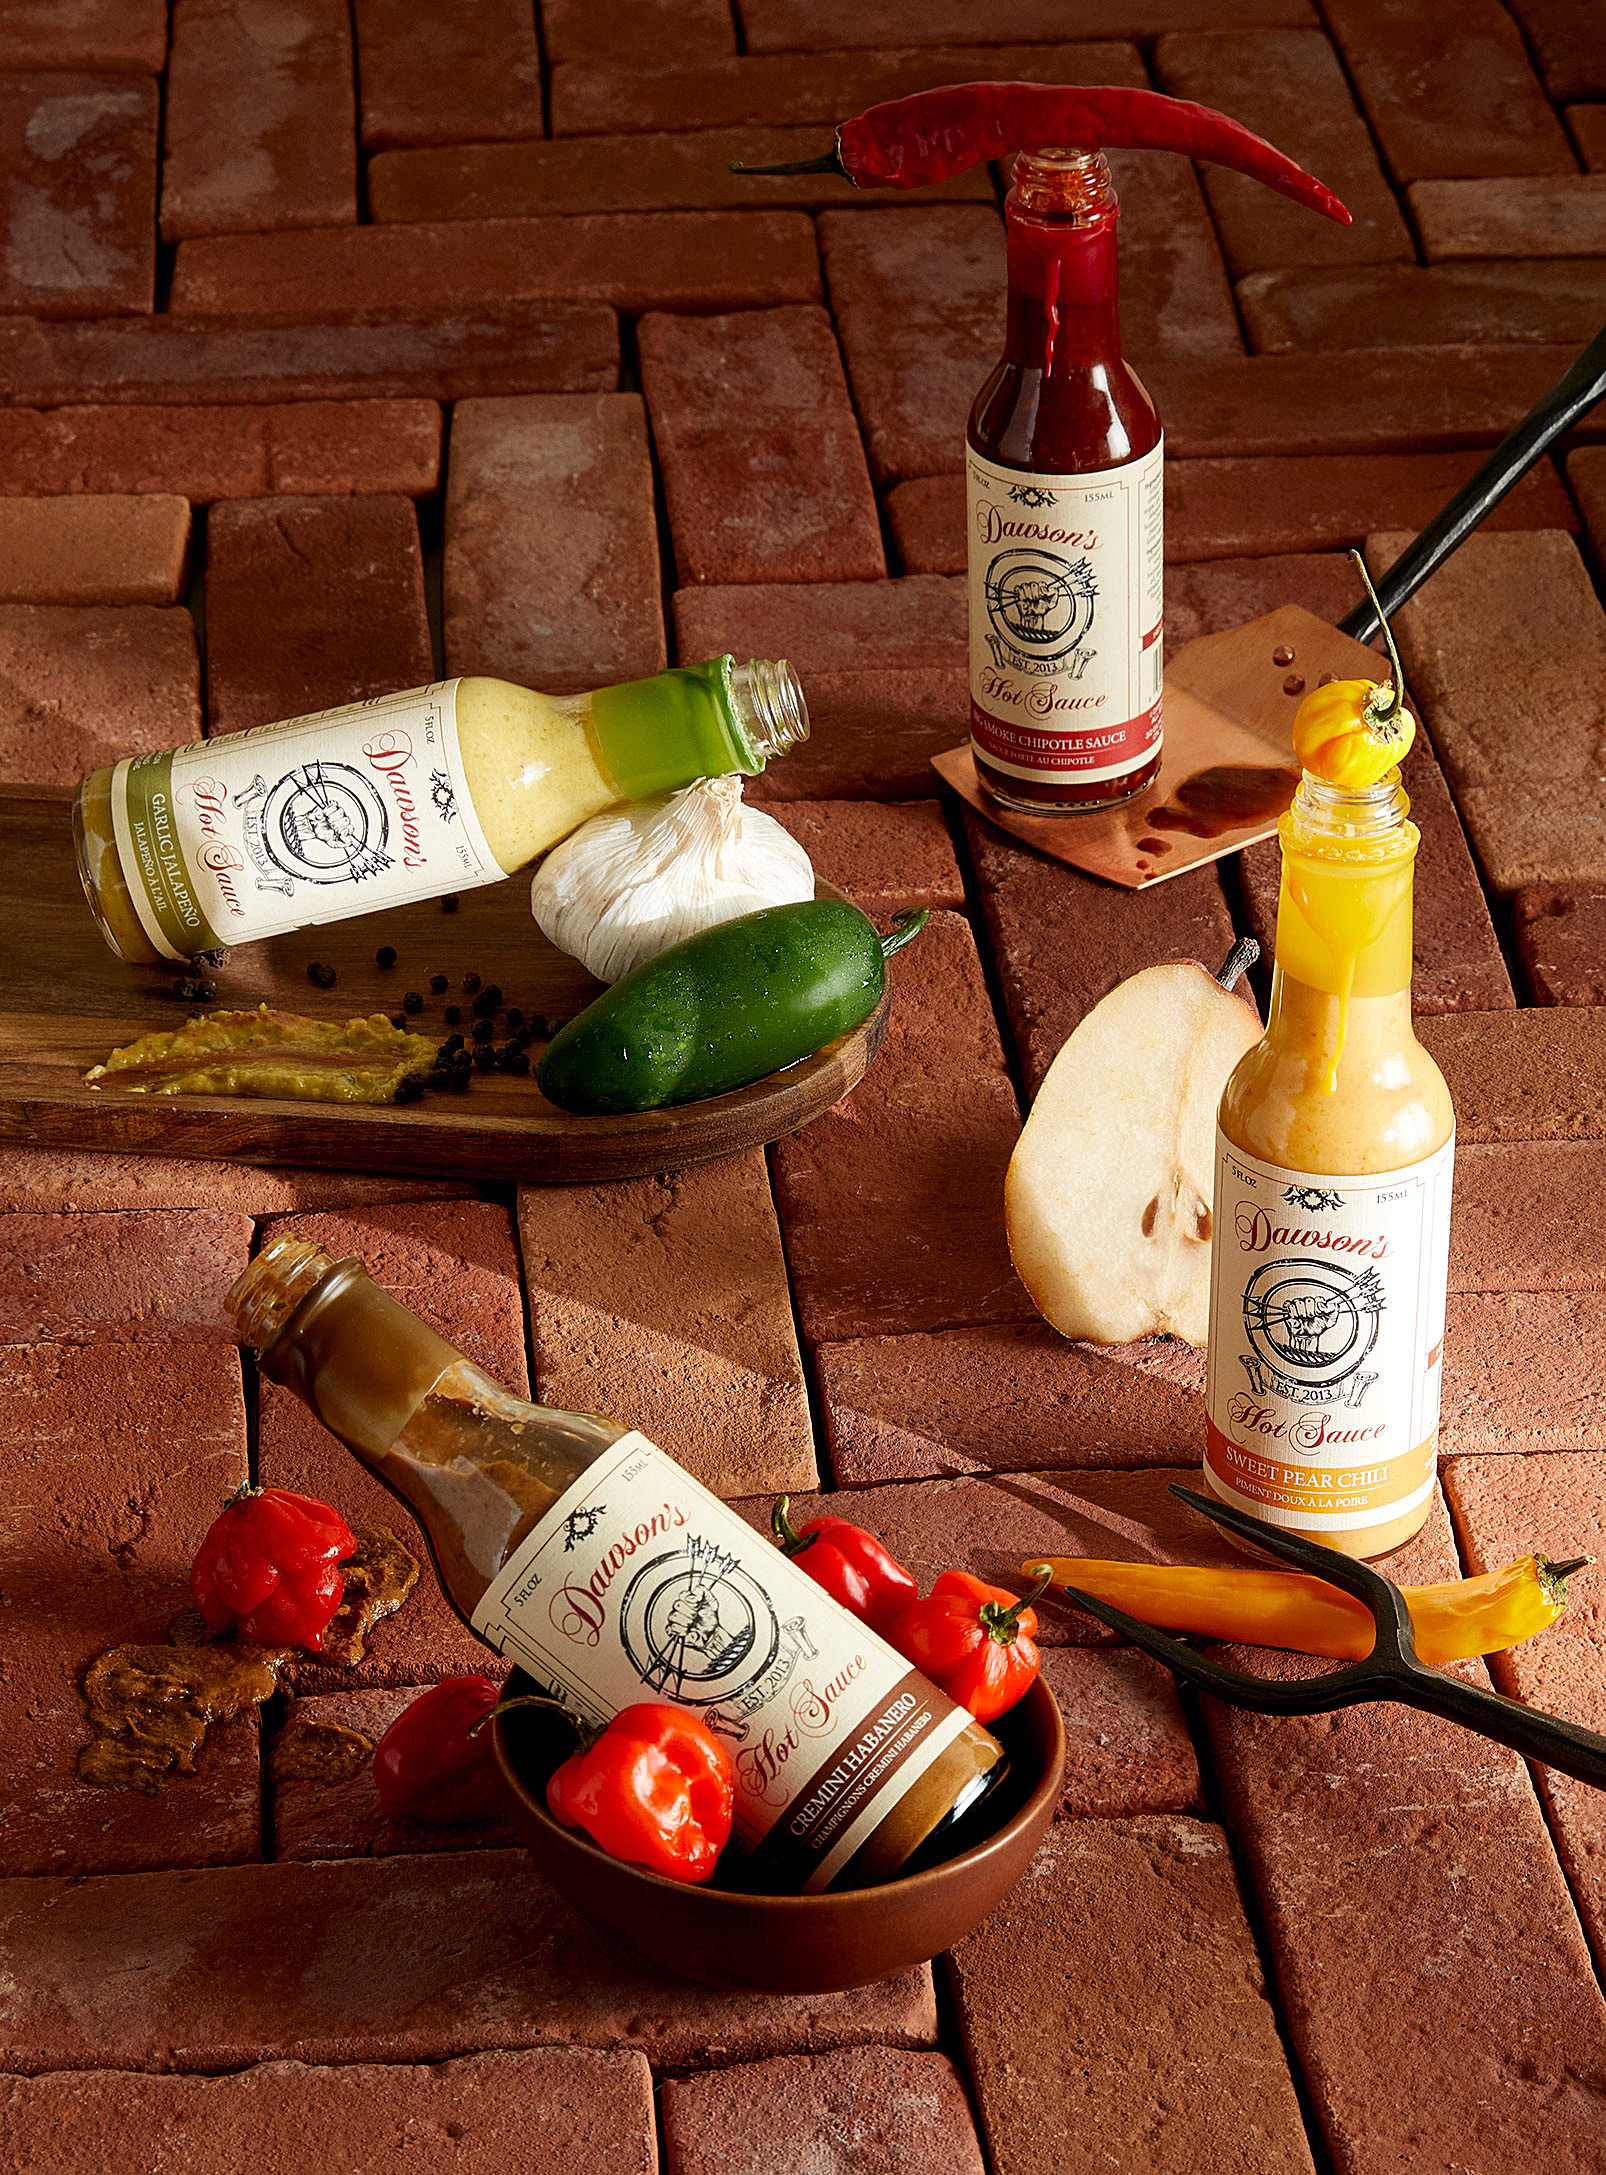 Dawson's Hot Sauce - Discovery set 4 sauces